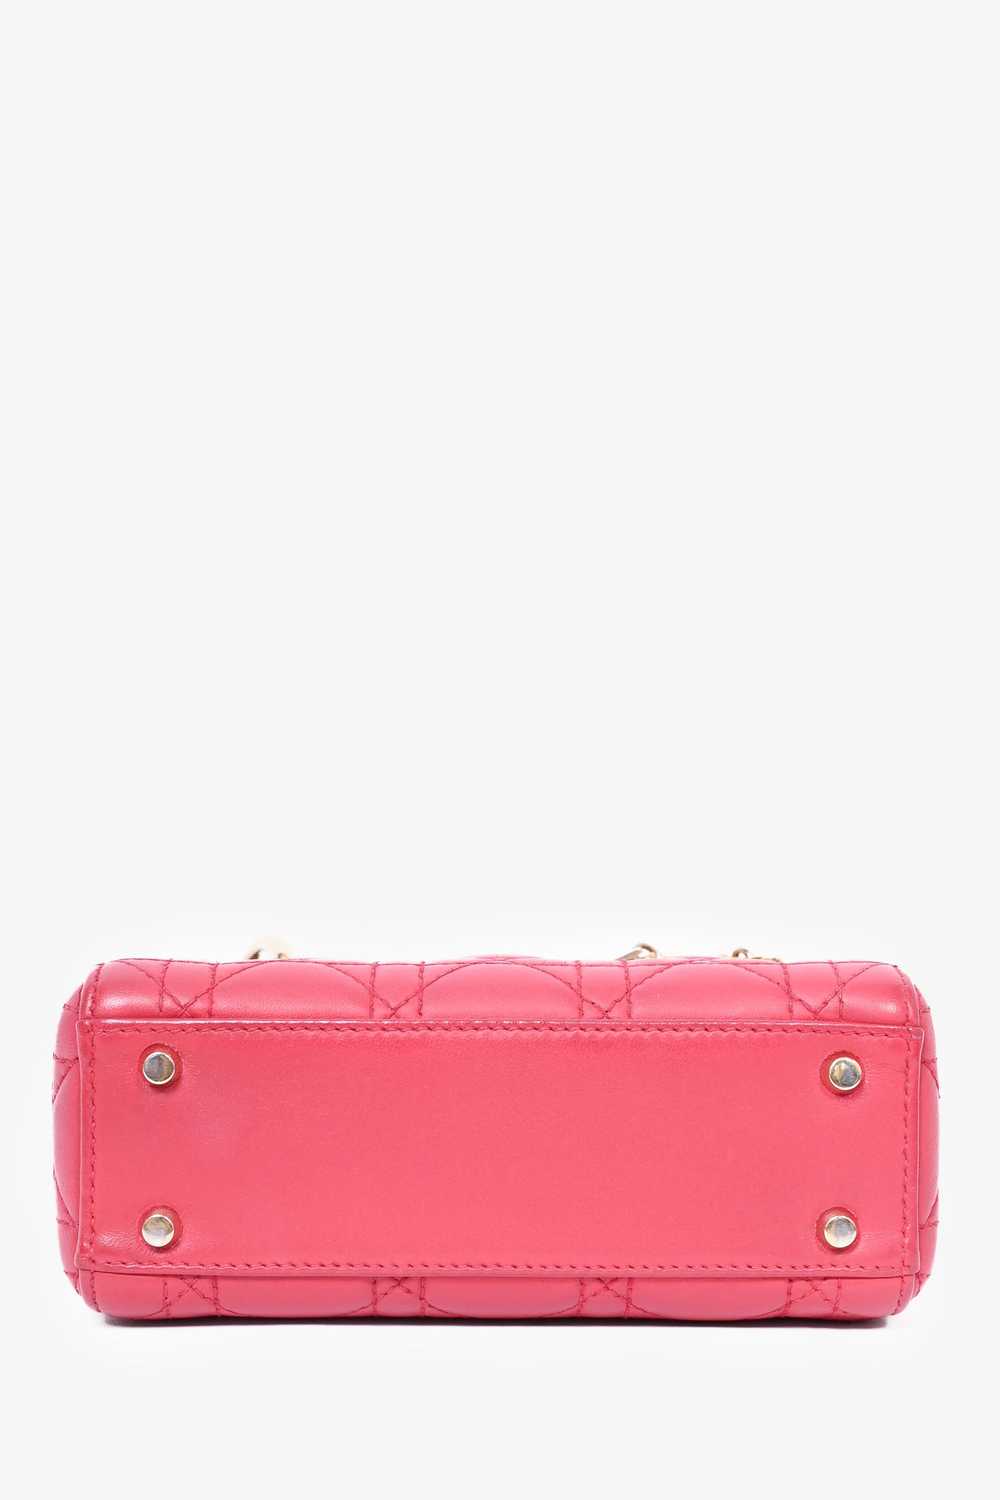 Christian Dior 2013 Pink Cannage Leather Mini Lad… - image 5